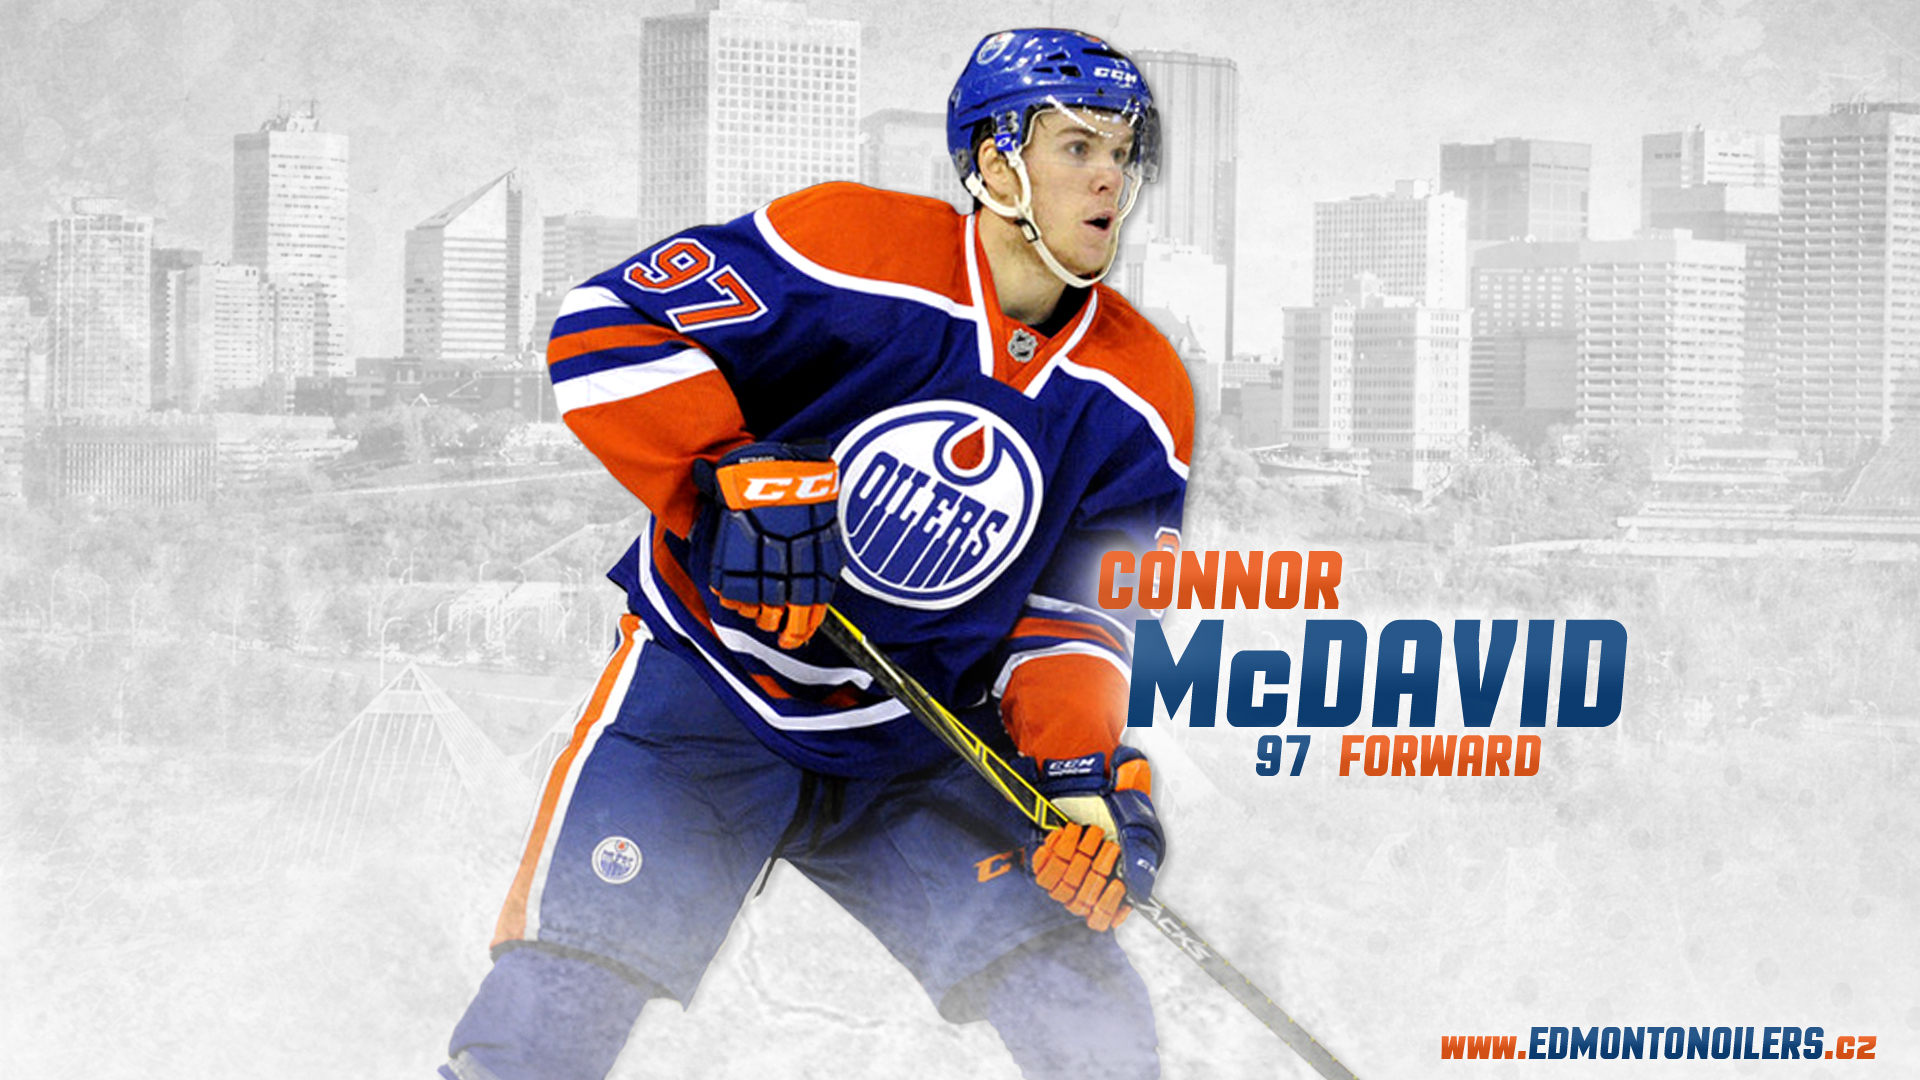 Mcdavid Edmonton Oilers